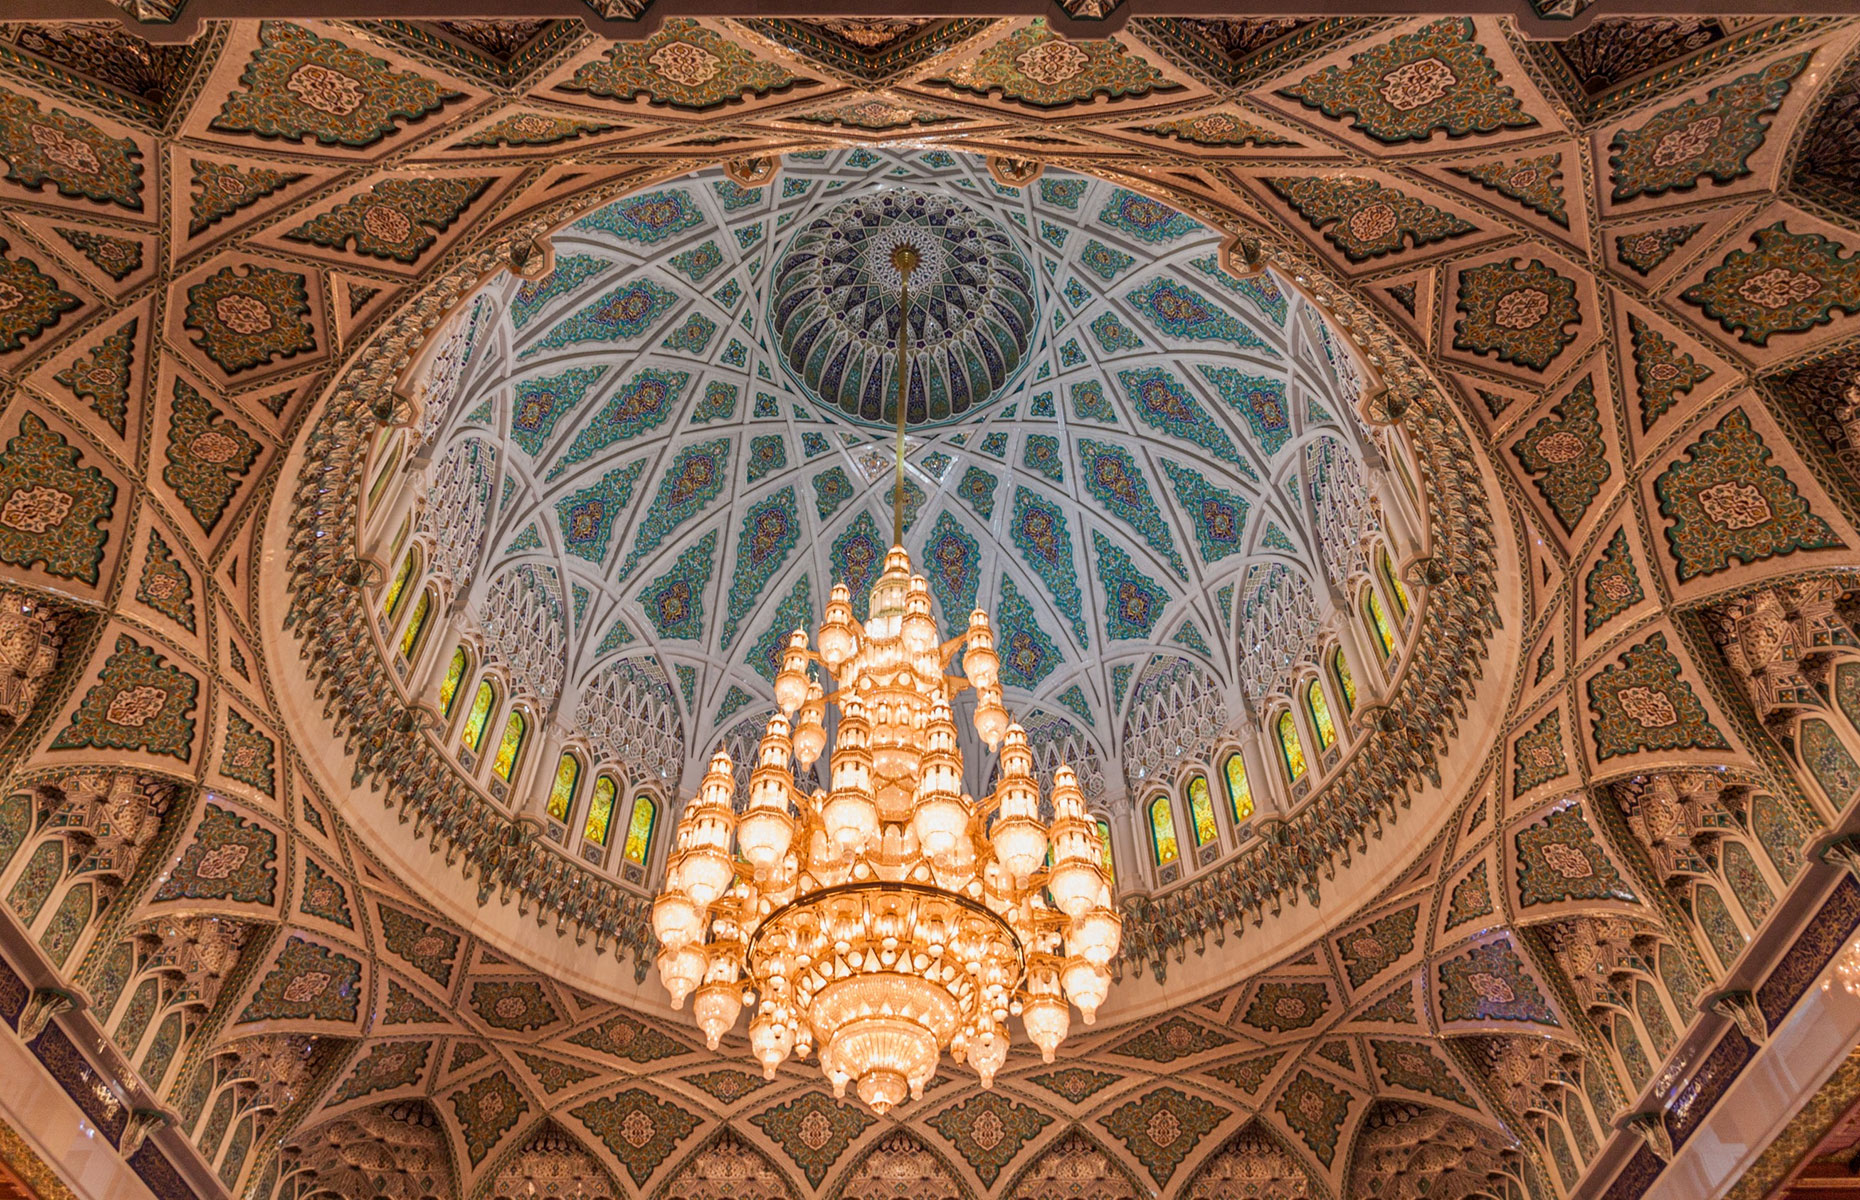 Chandelier at Sultan Qaboos Grand Mosque, Muscat (Image: Shutterstock/Matyas Rehak)